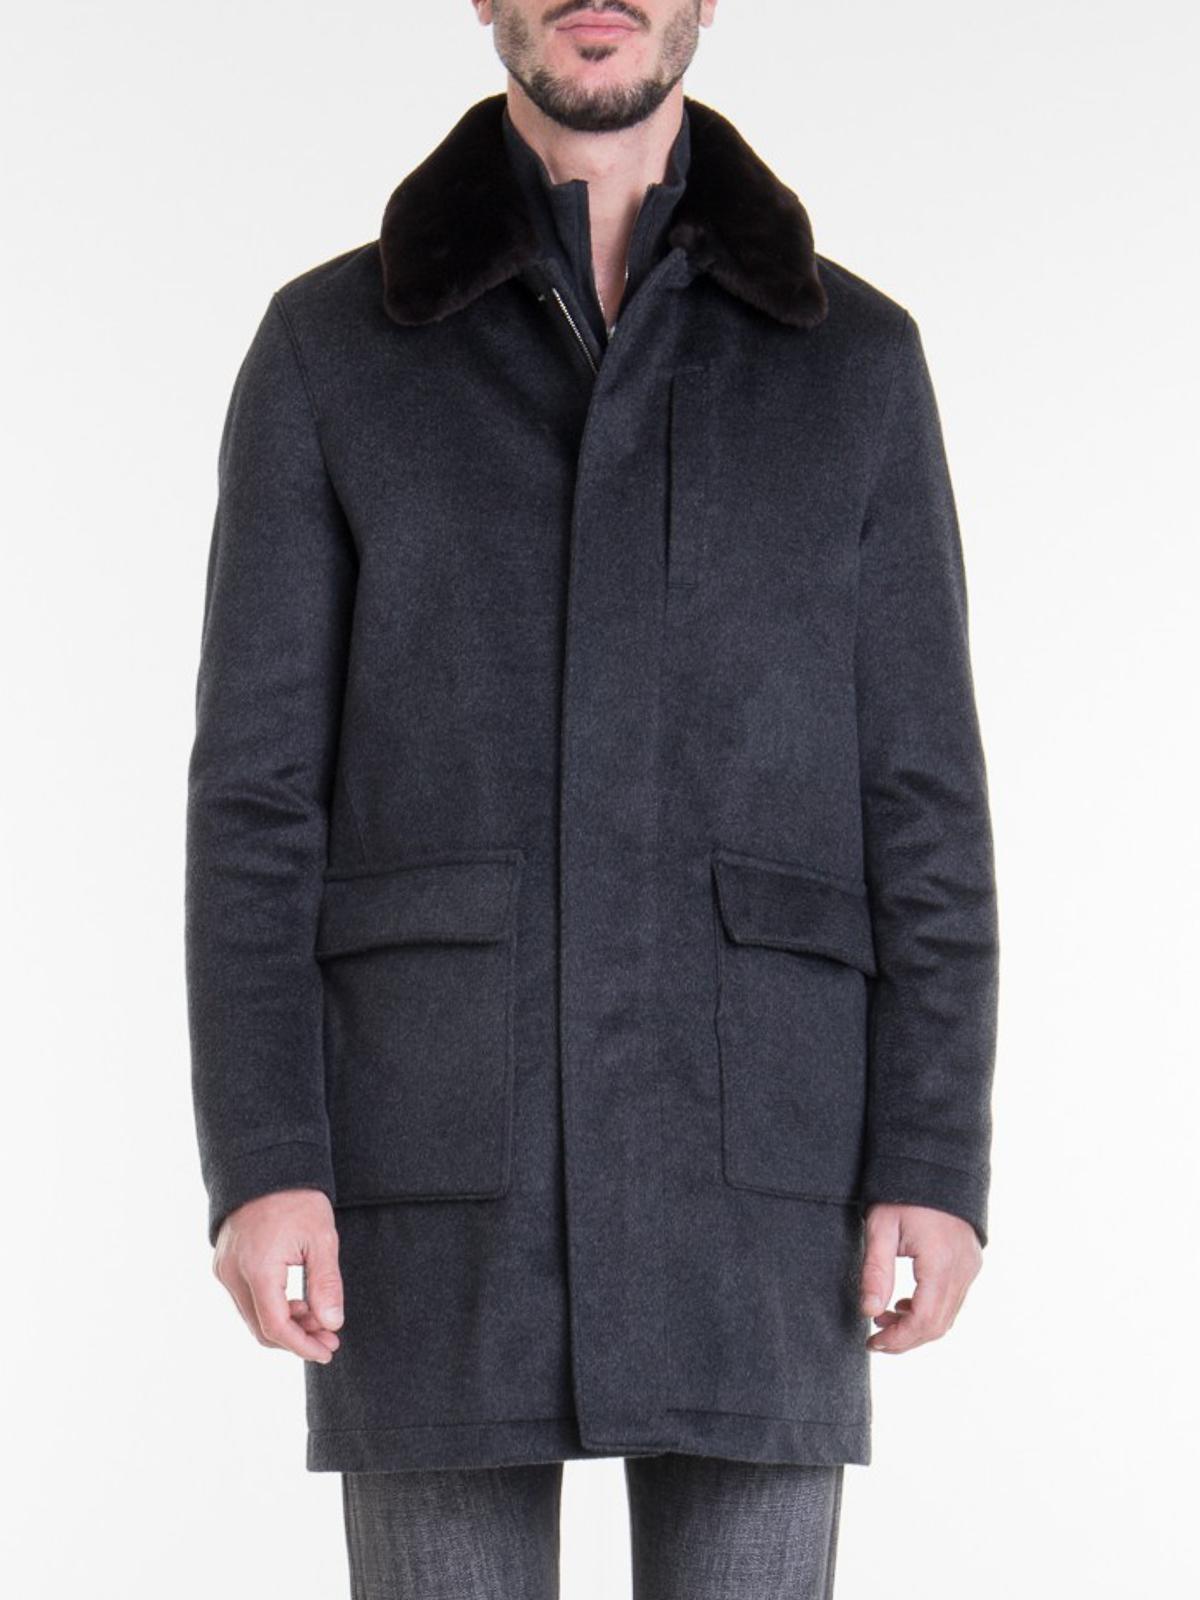 Corneliani Wool Coat in Dark Grey (Gray) for Men - Lyst